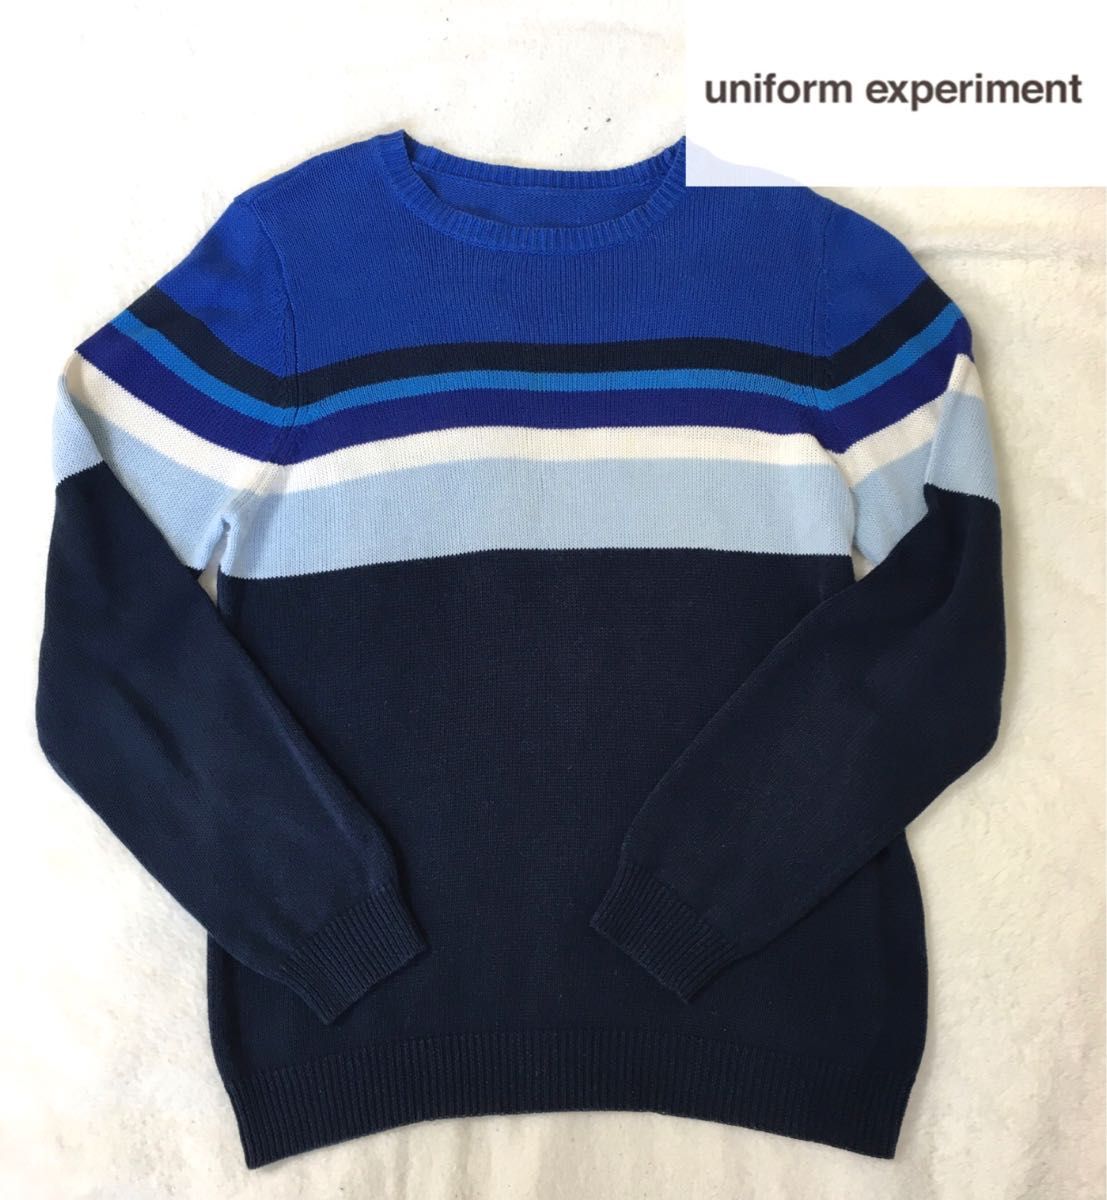 uniform experiment fragment asger jorn MA-1 L メンズファッション